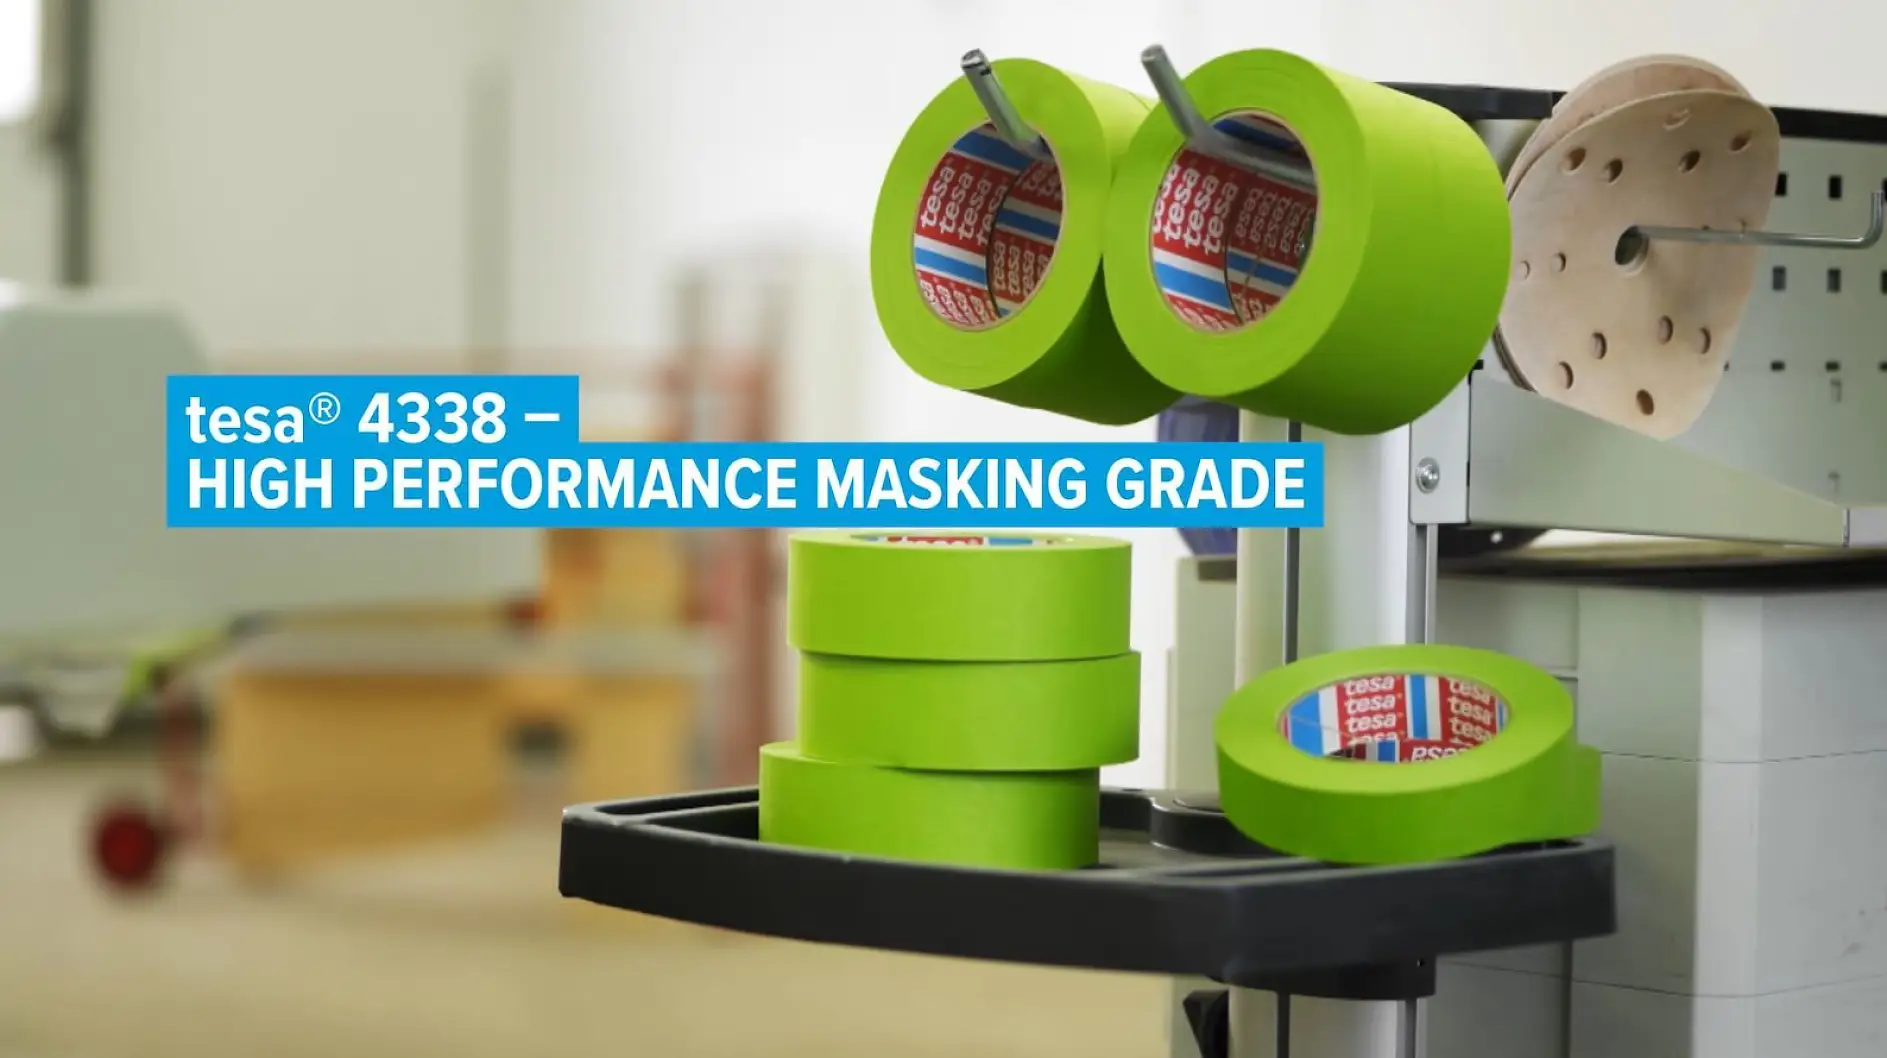 tesa 4338 High-Performance Masking Grade application video